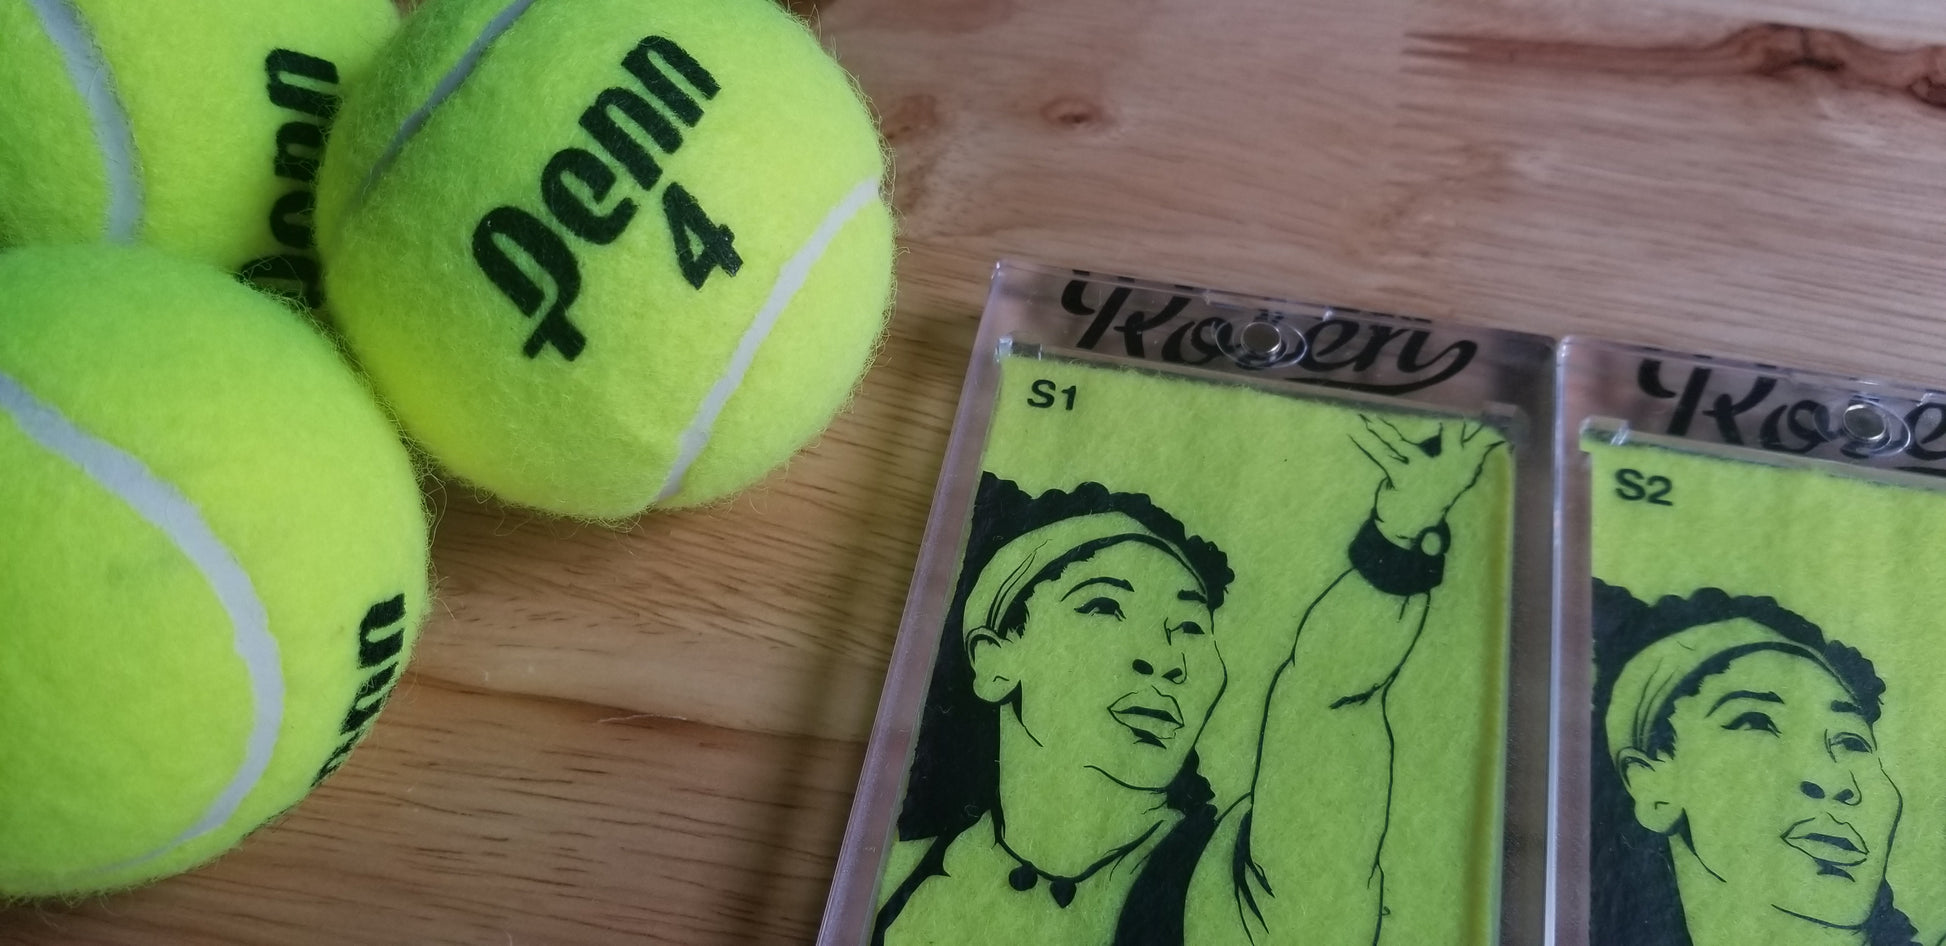 Tennis ball art by Matt Rosen - Serena Williams and John McEnroe